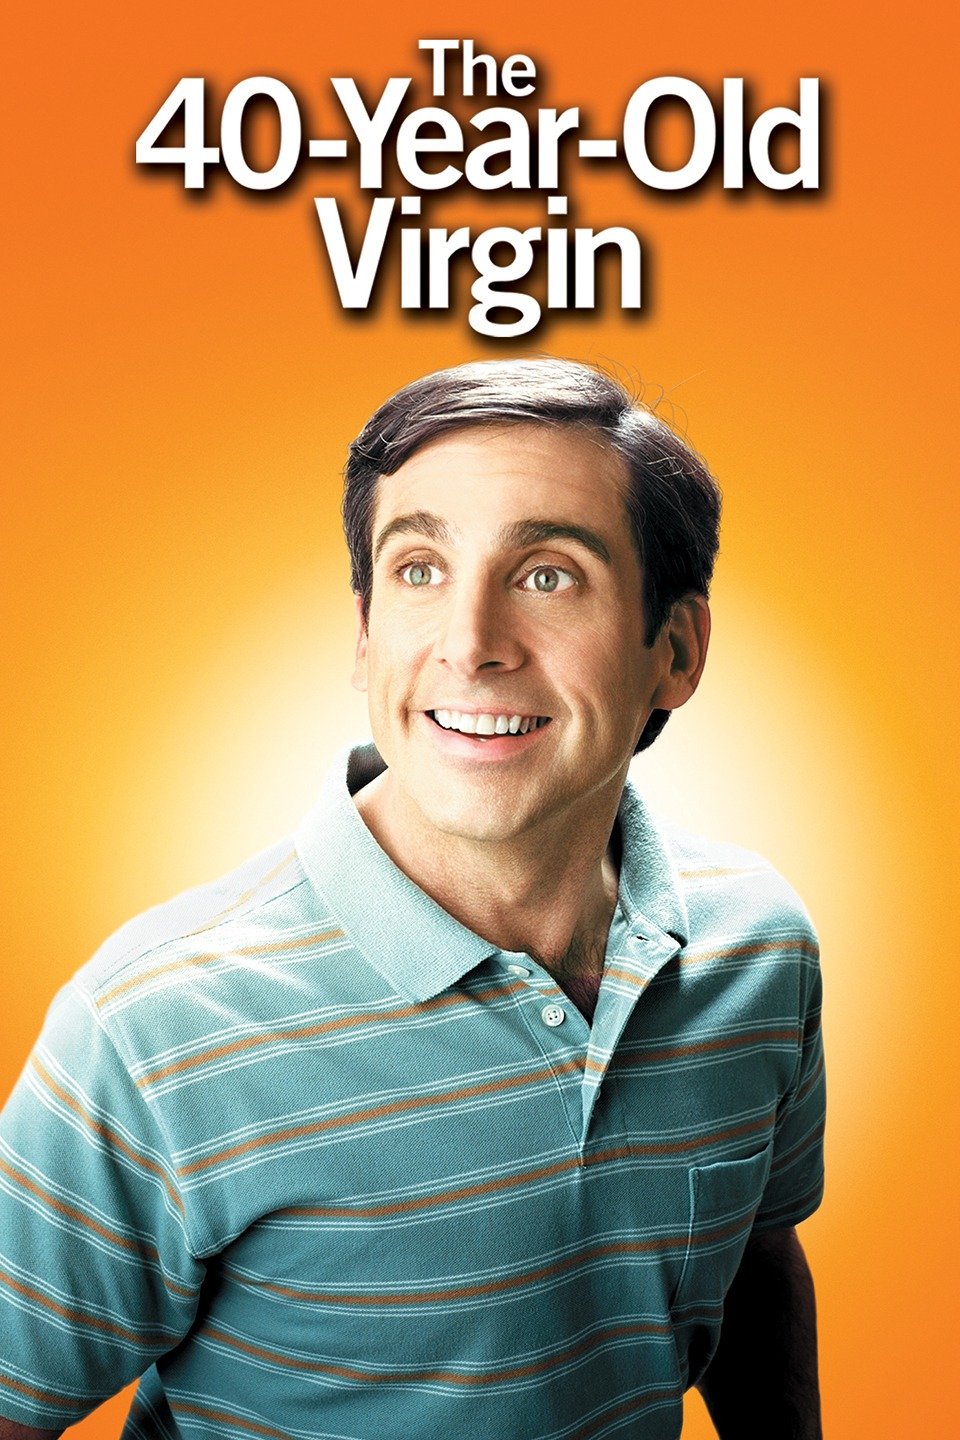 Vigran Rape Video Free Download - The 40-Year-Old Virgin - Rotten Tomatoes